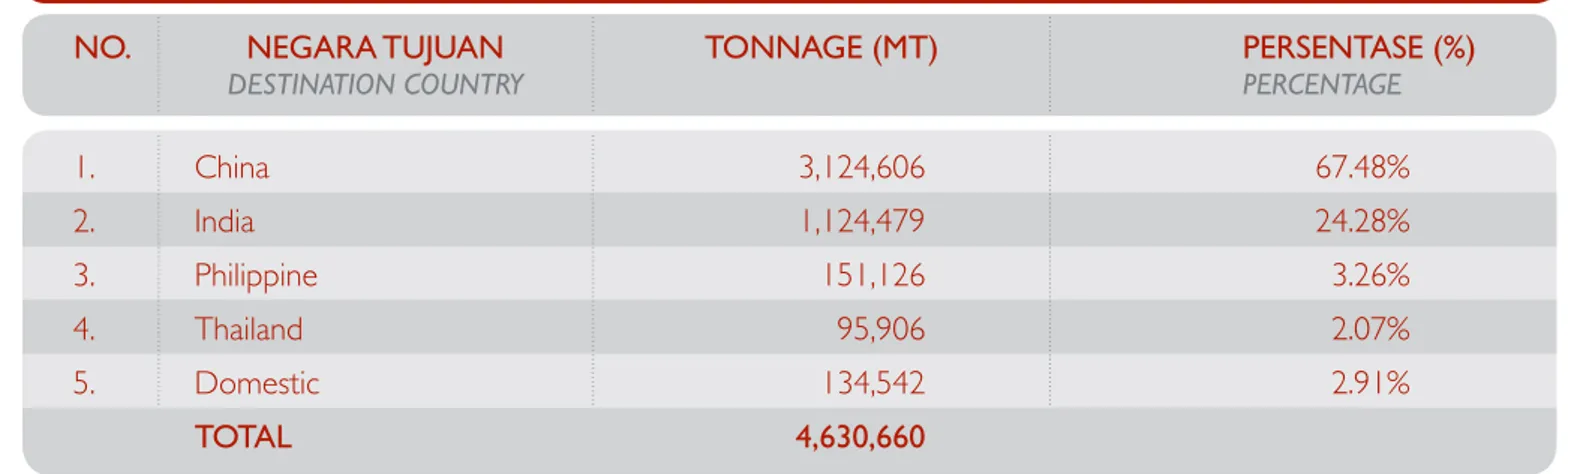 TABEL NEGARA TUJUAN PENJUALAN BATUBARA   TABLE OF COAL SALES DESTINATION COUNTRIES NEGARA TUJUAN DESTINATION COUNTRY TONNAGE (MT) PERSENTASE (%)PERCENTAGE 1